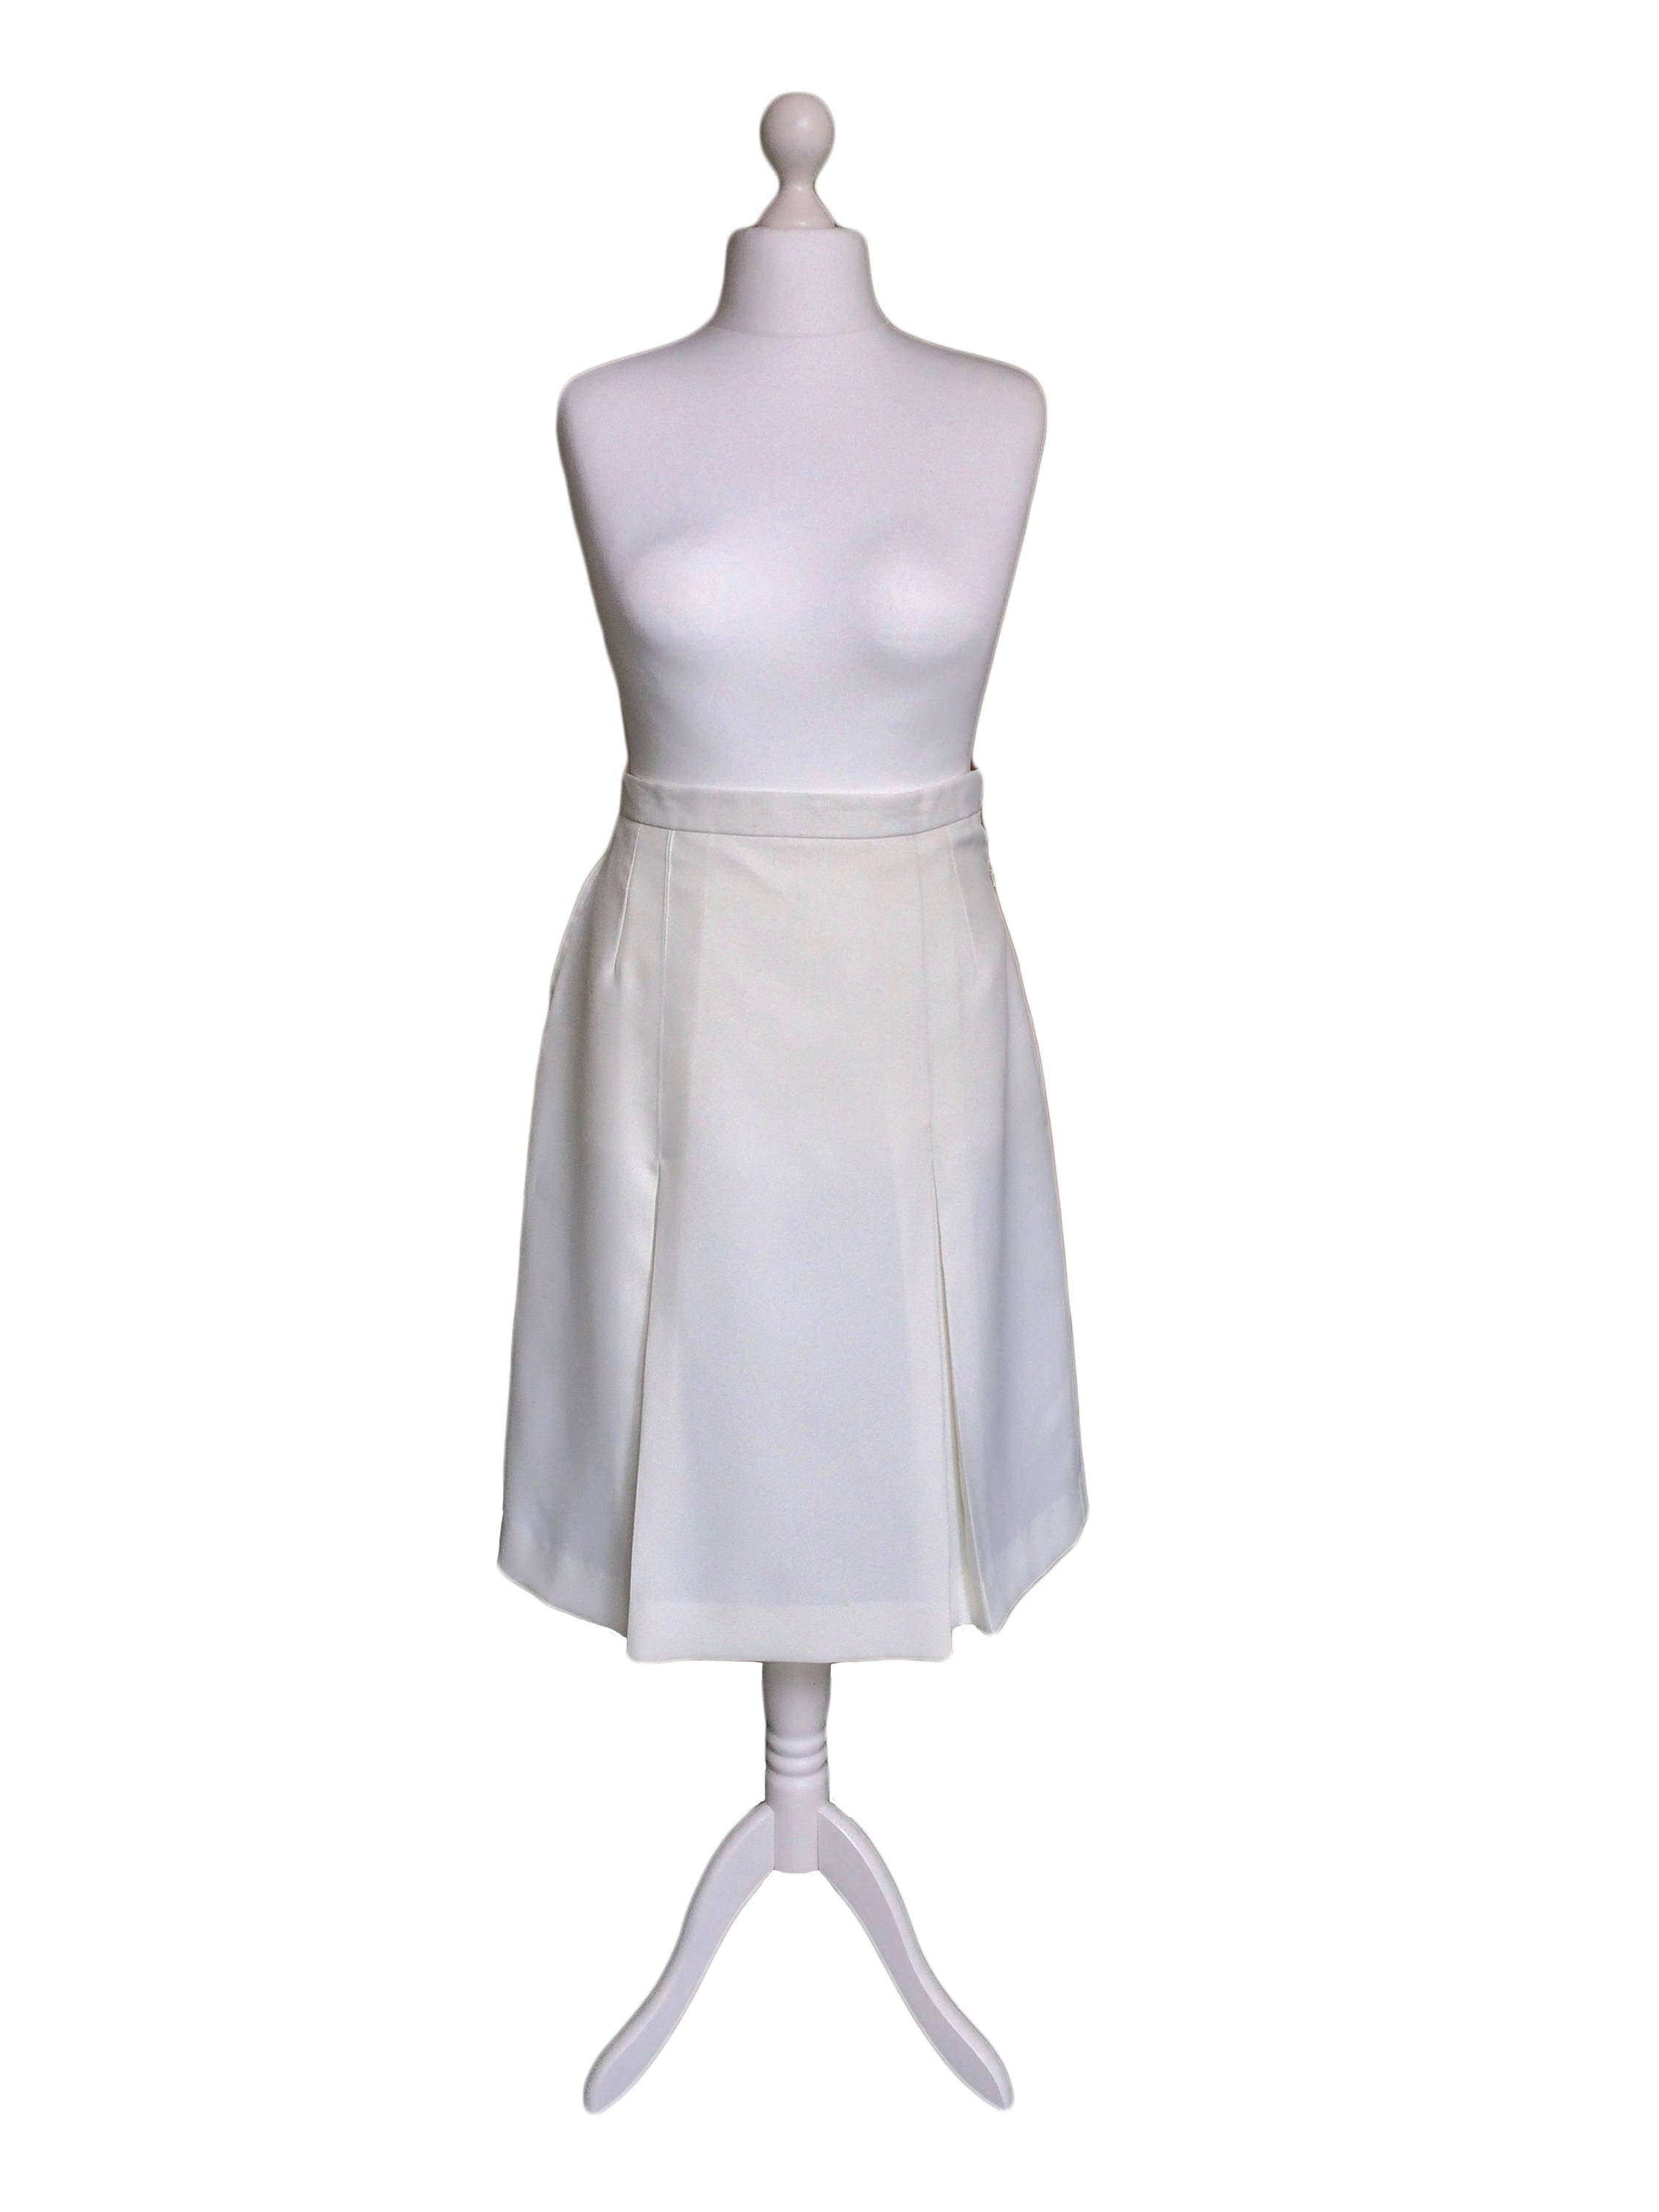 Nurse Uniform Skirt 4